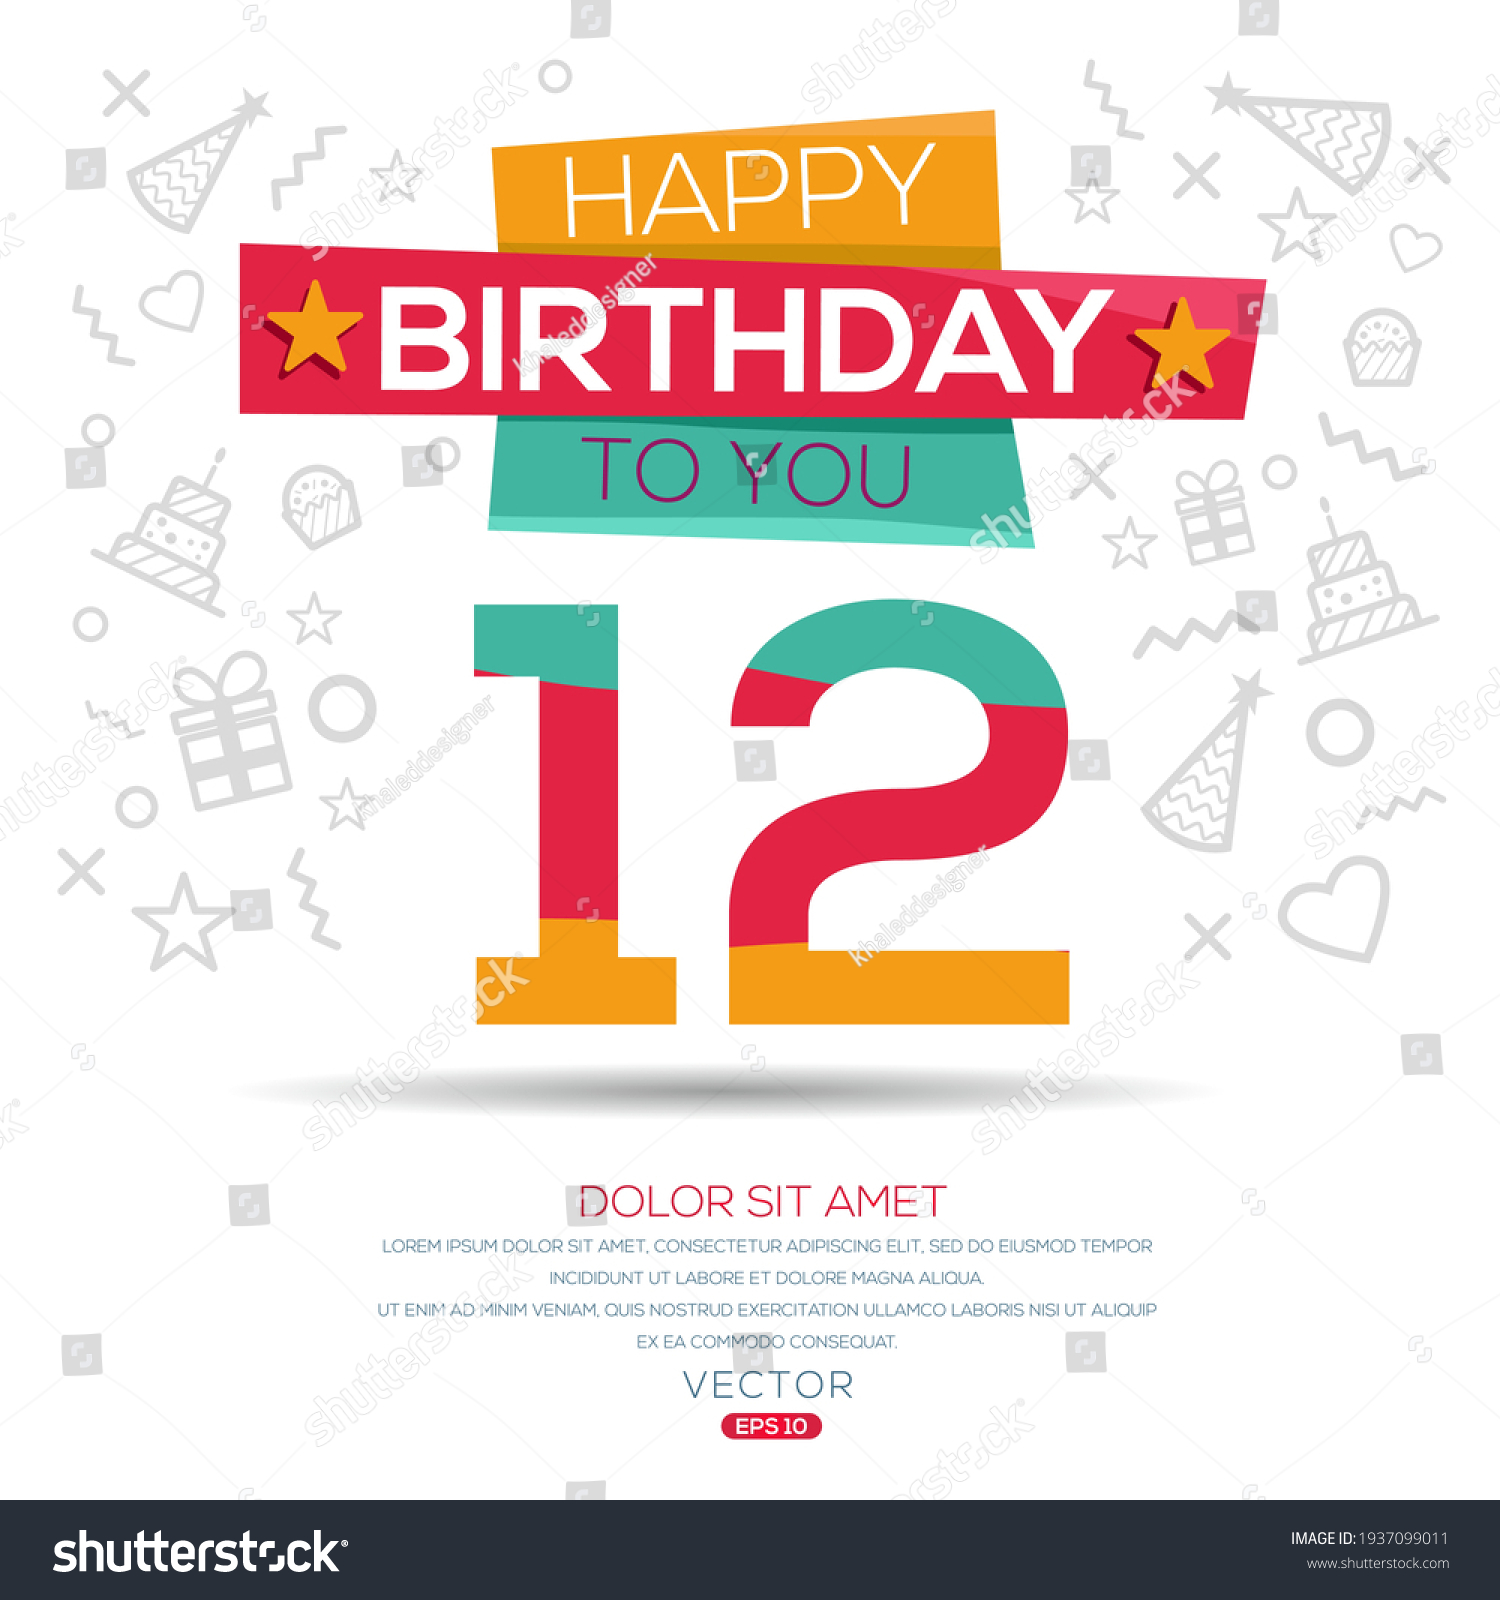 12 birthday Images, Stock Photos & Vectors | Shutterstock